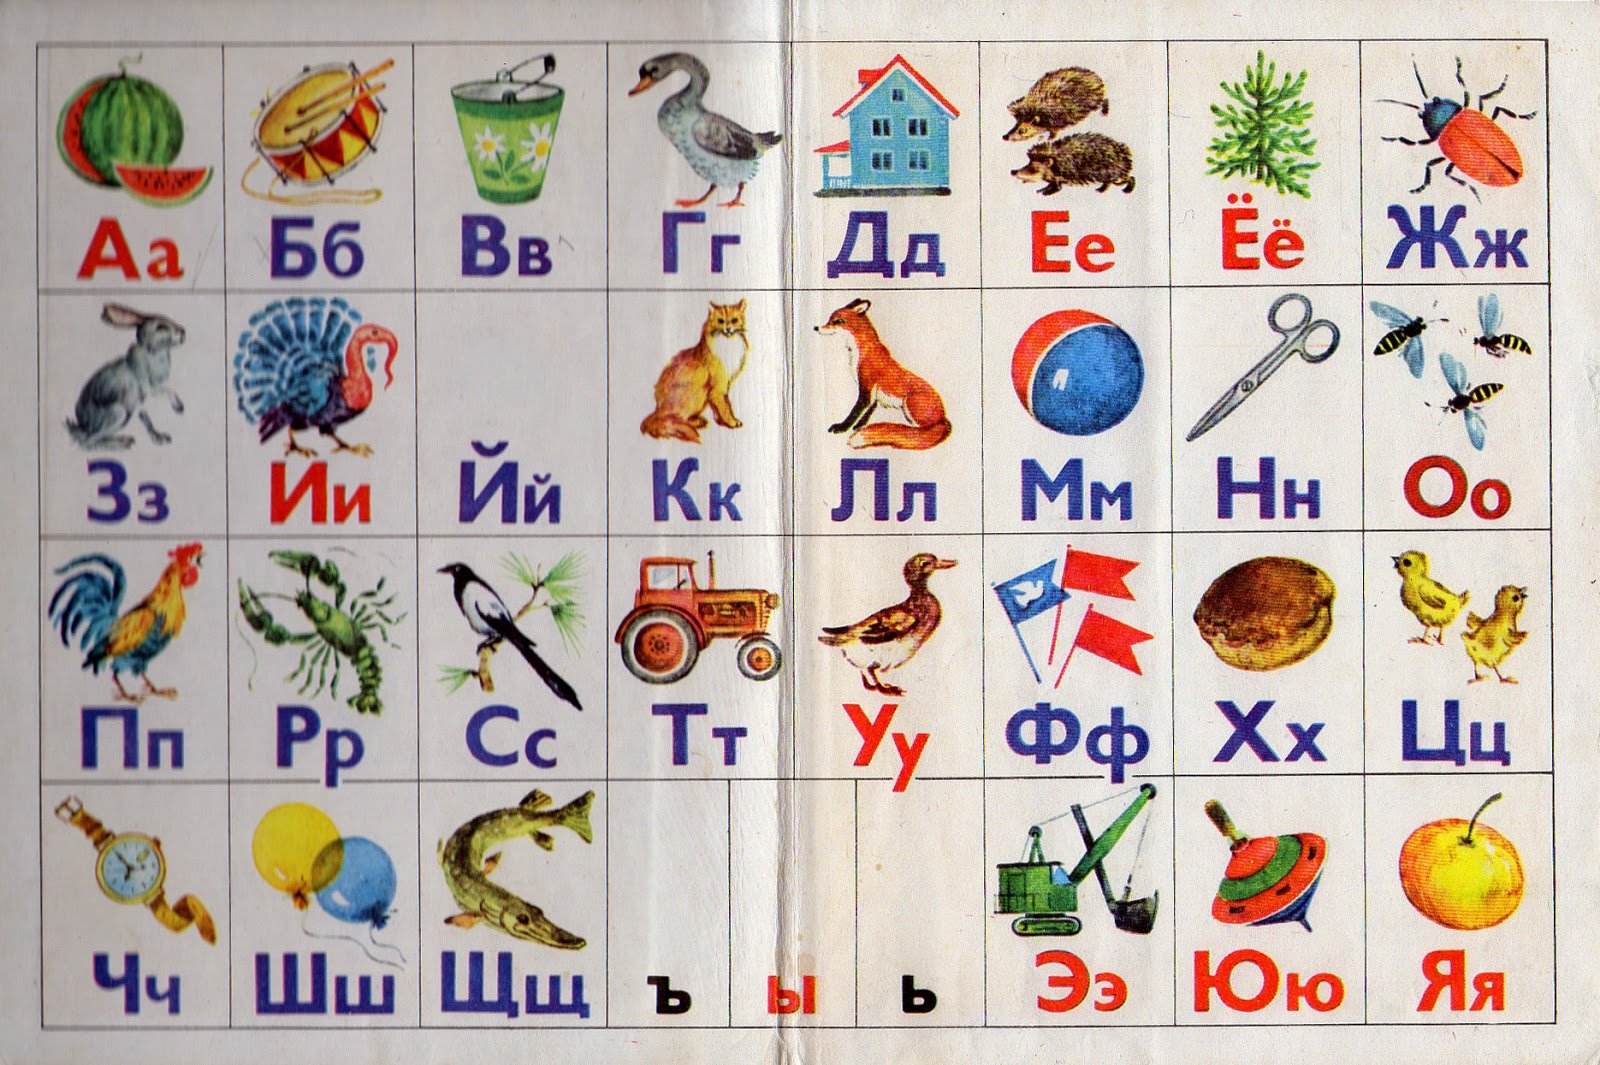 Где найти алфавит. Азбука в картинках. Азбука картинка для детей. Алфавит для детей. Алфавит русский для детей.